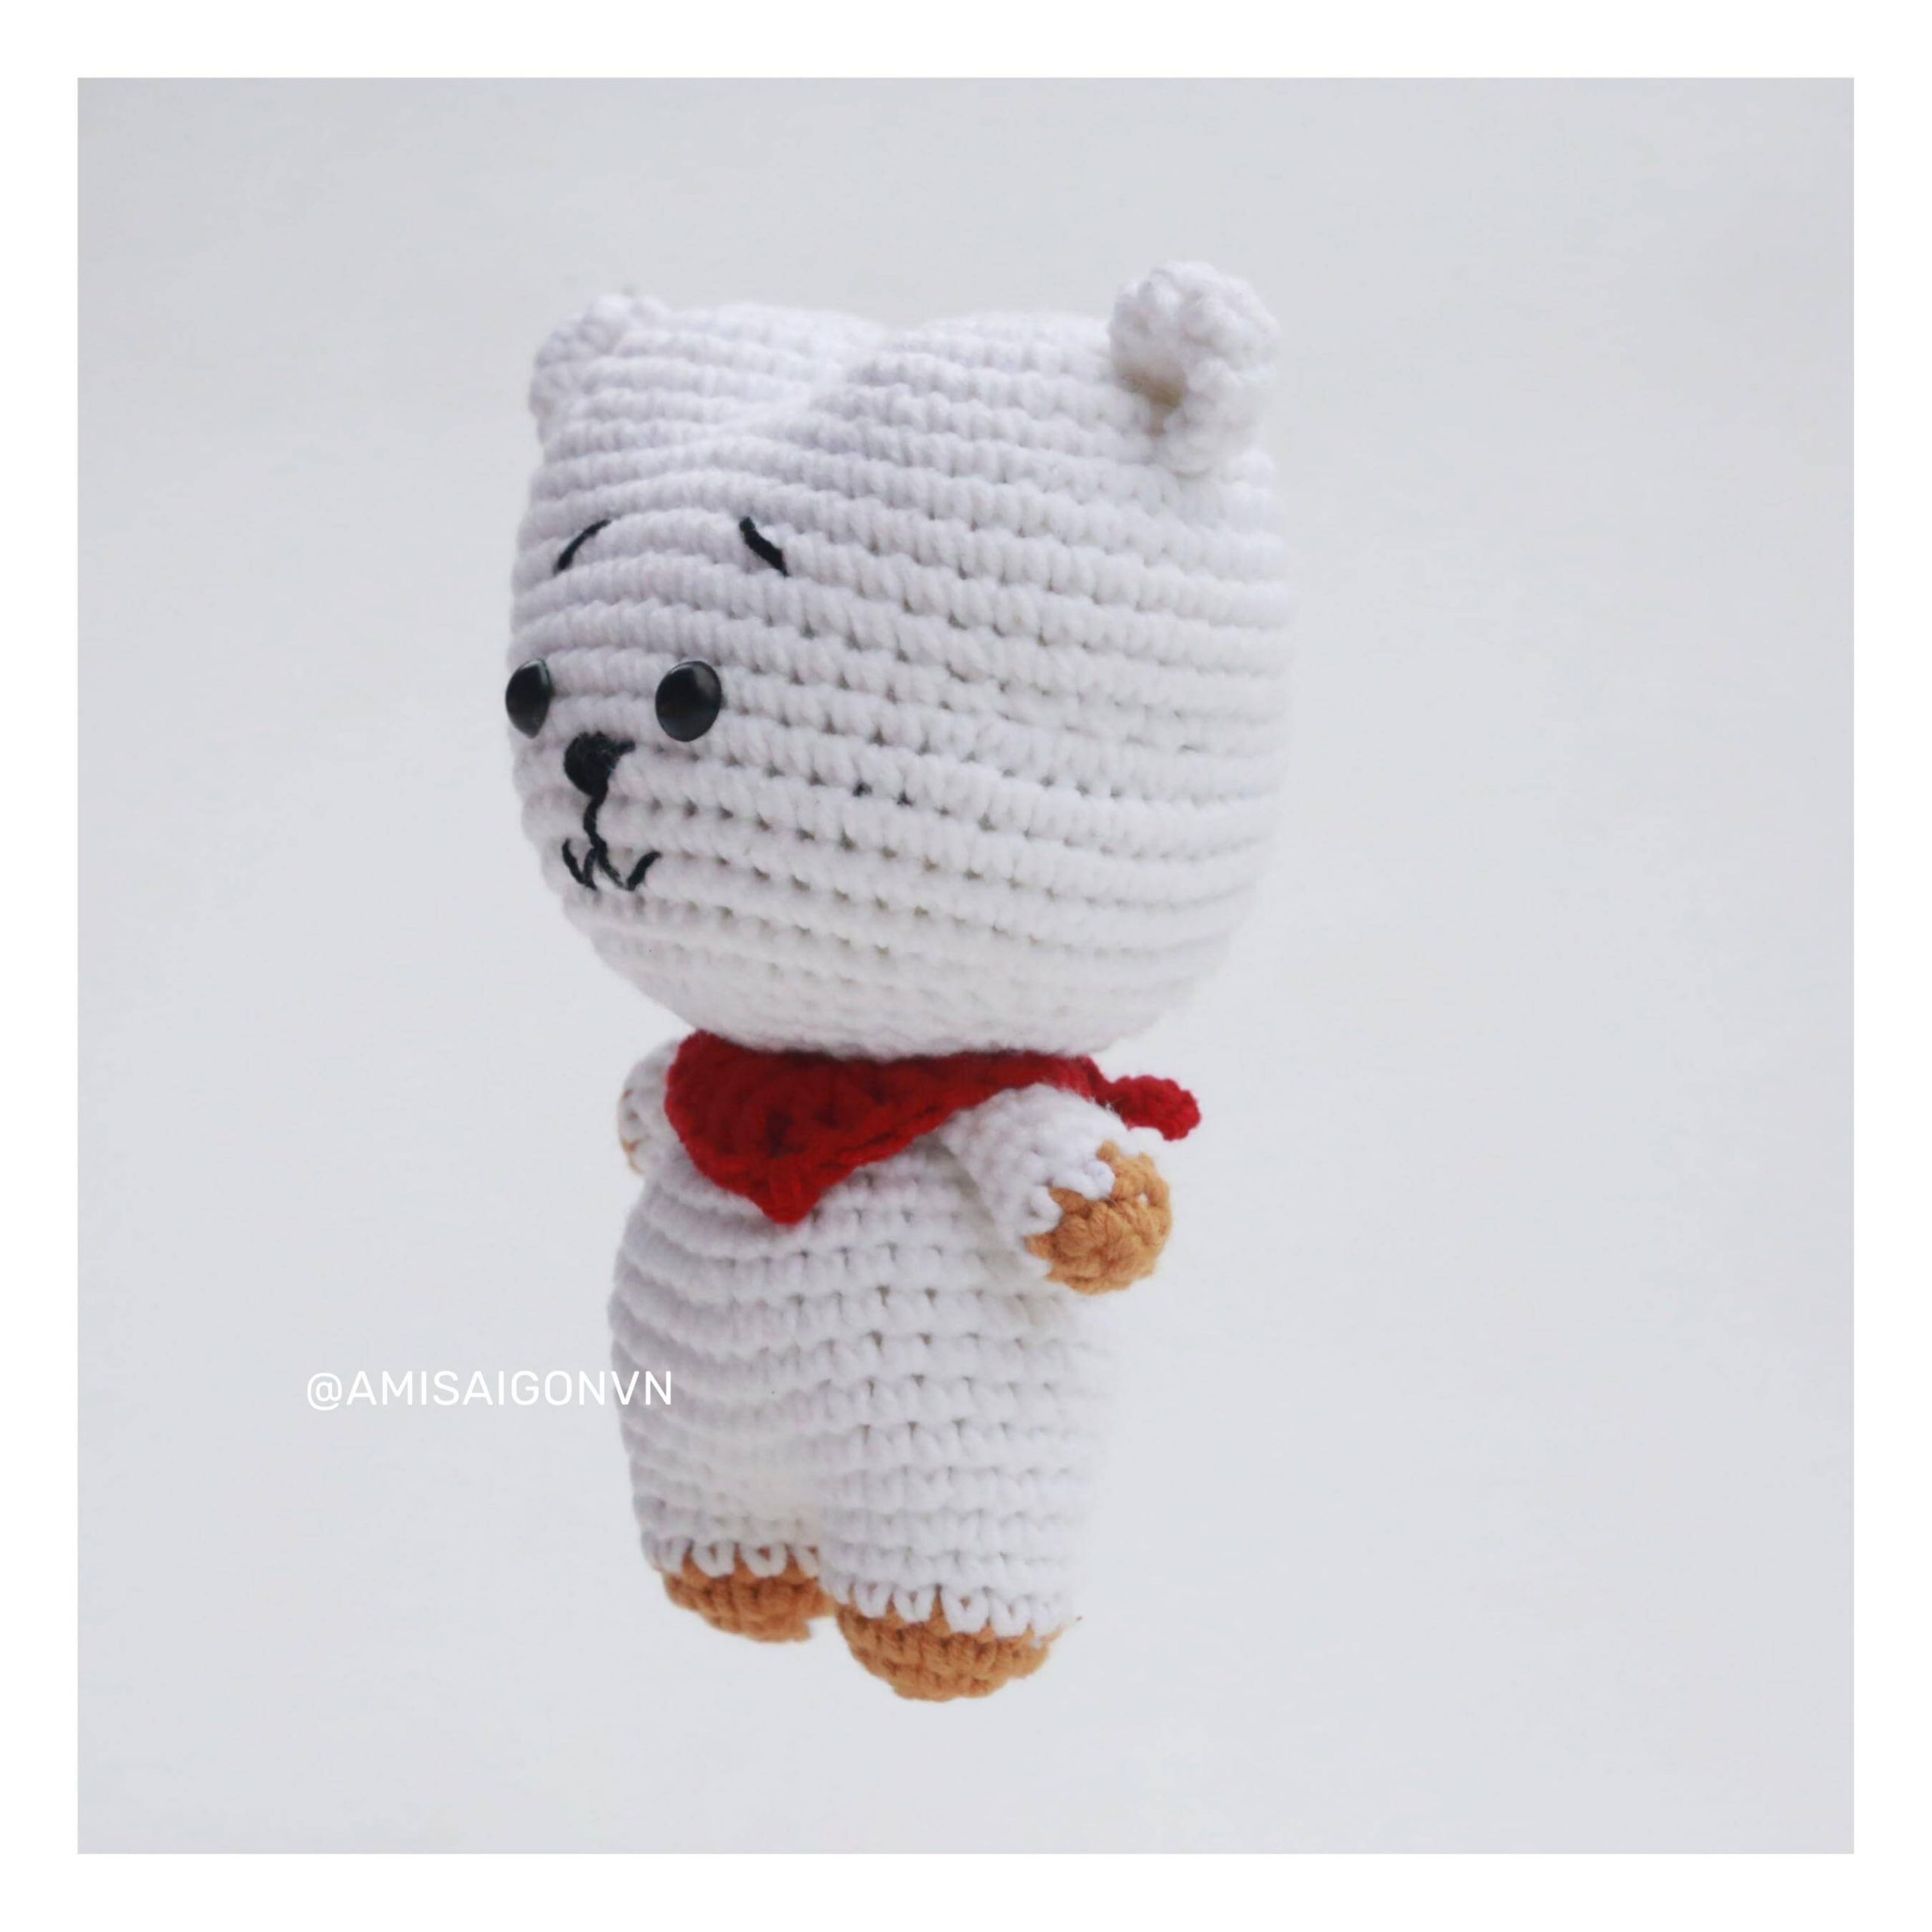 RJ-sheep-amigurumi-crochet-pattern-amisaigon-bts-bt21 (5)